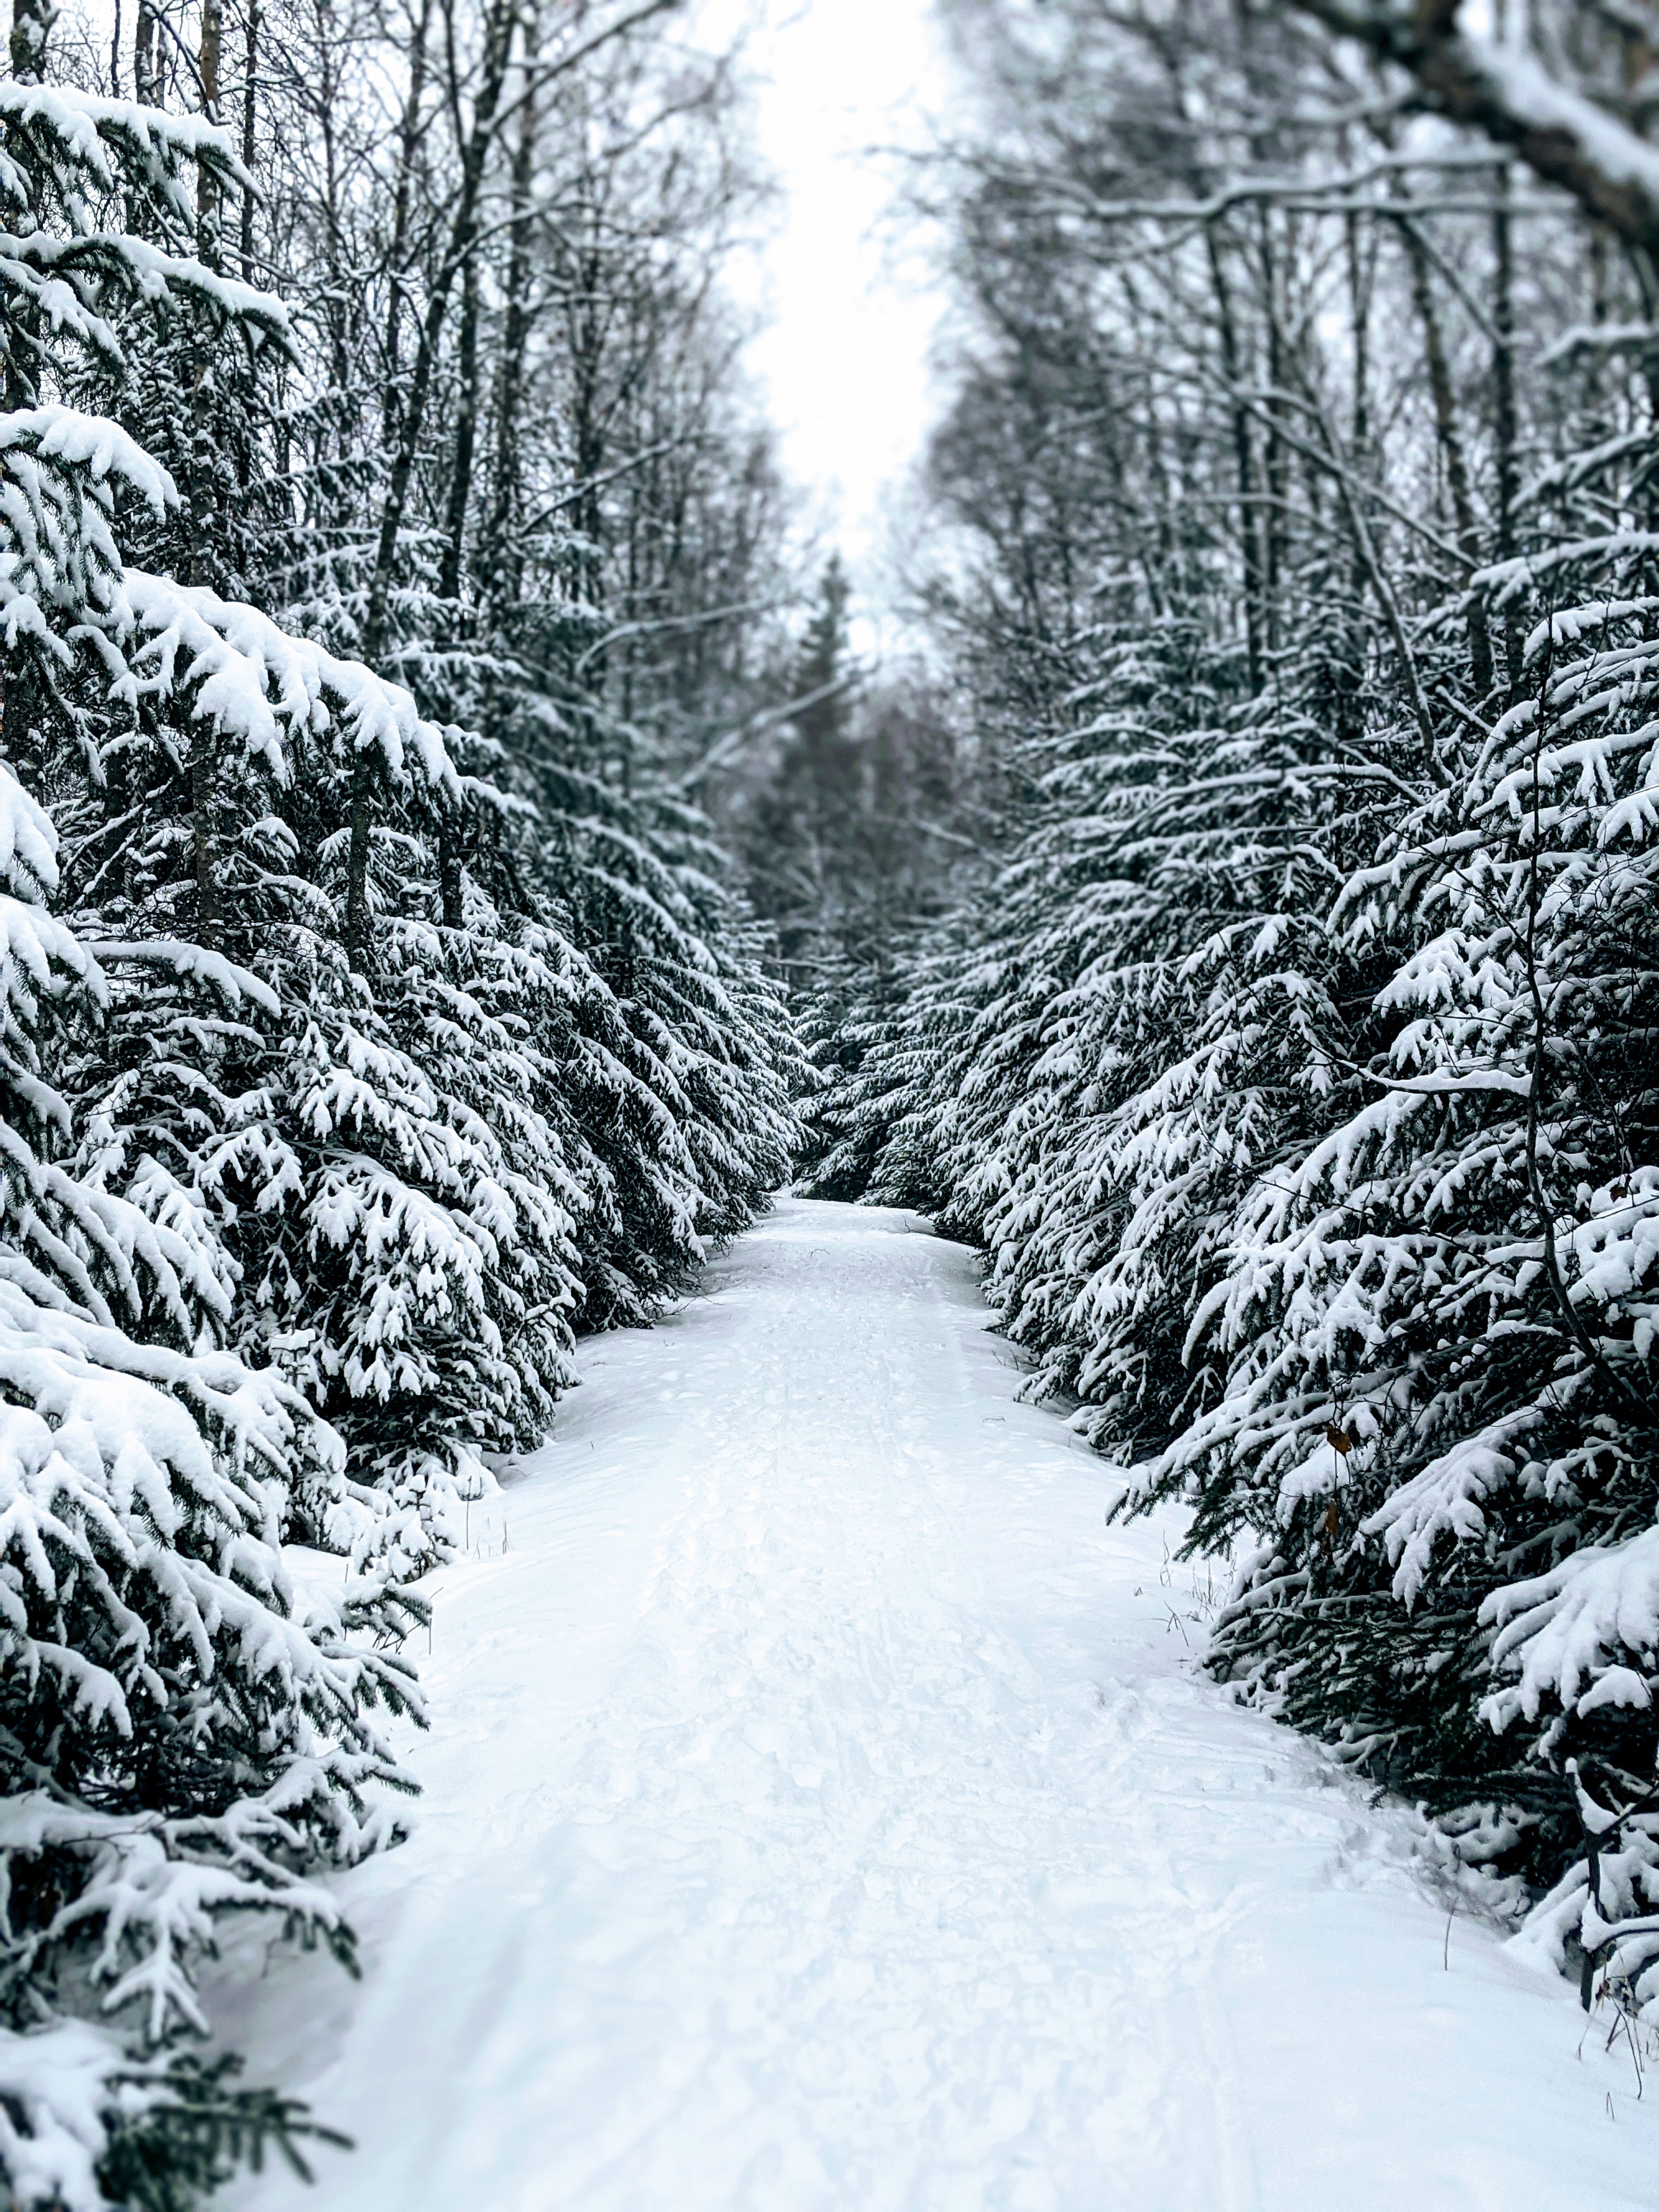 The snowy trail